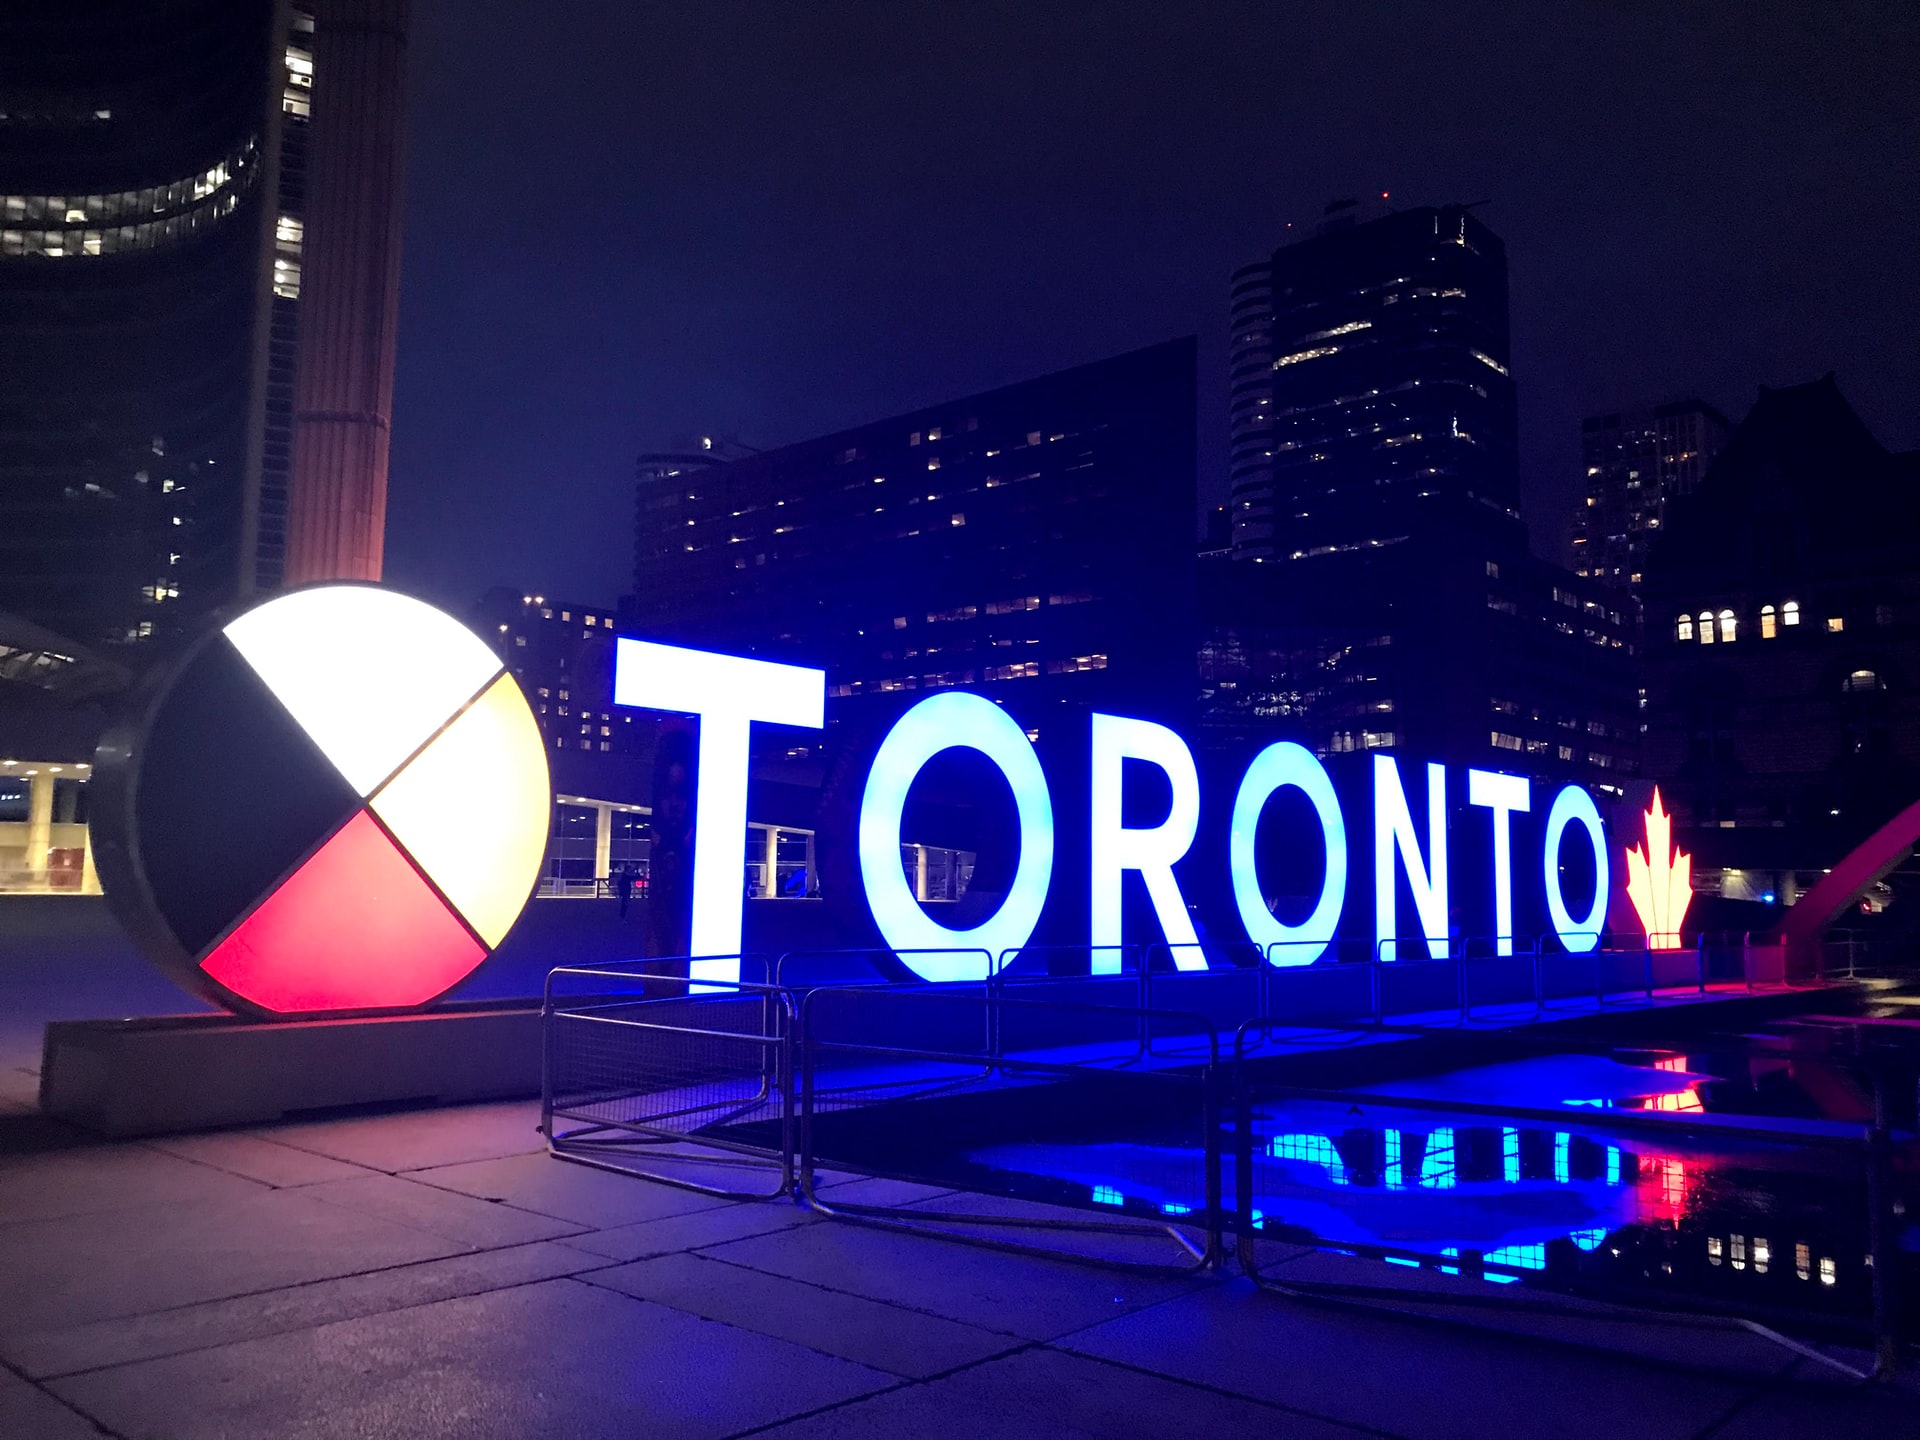 A large Toronto sign illuminated at night